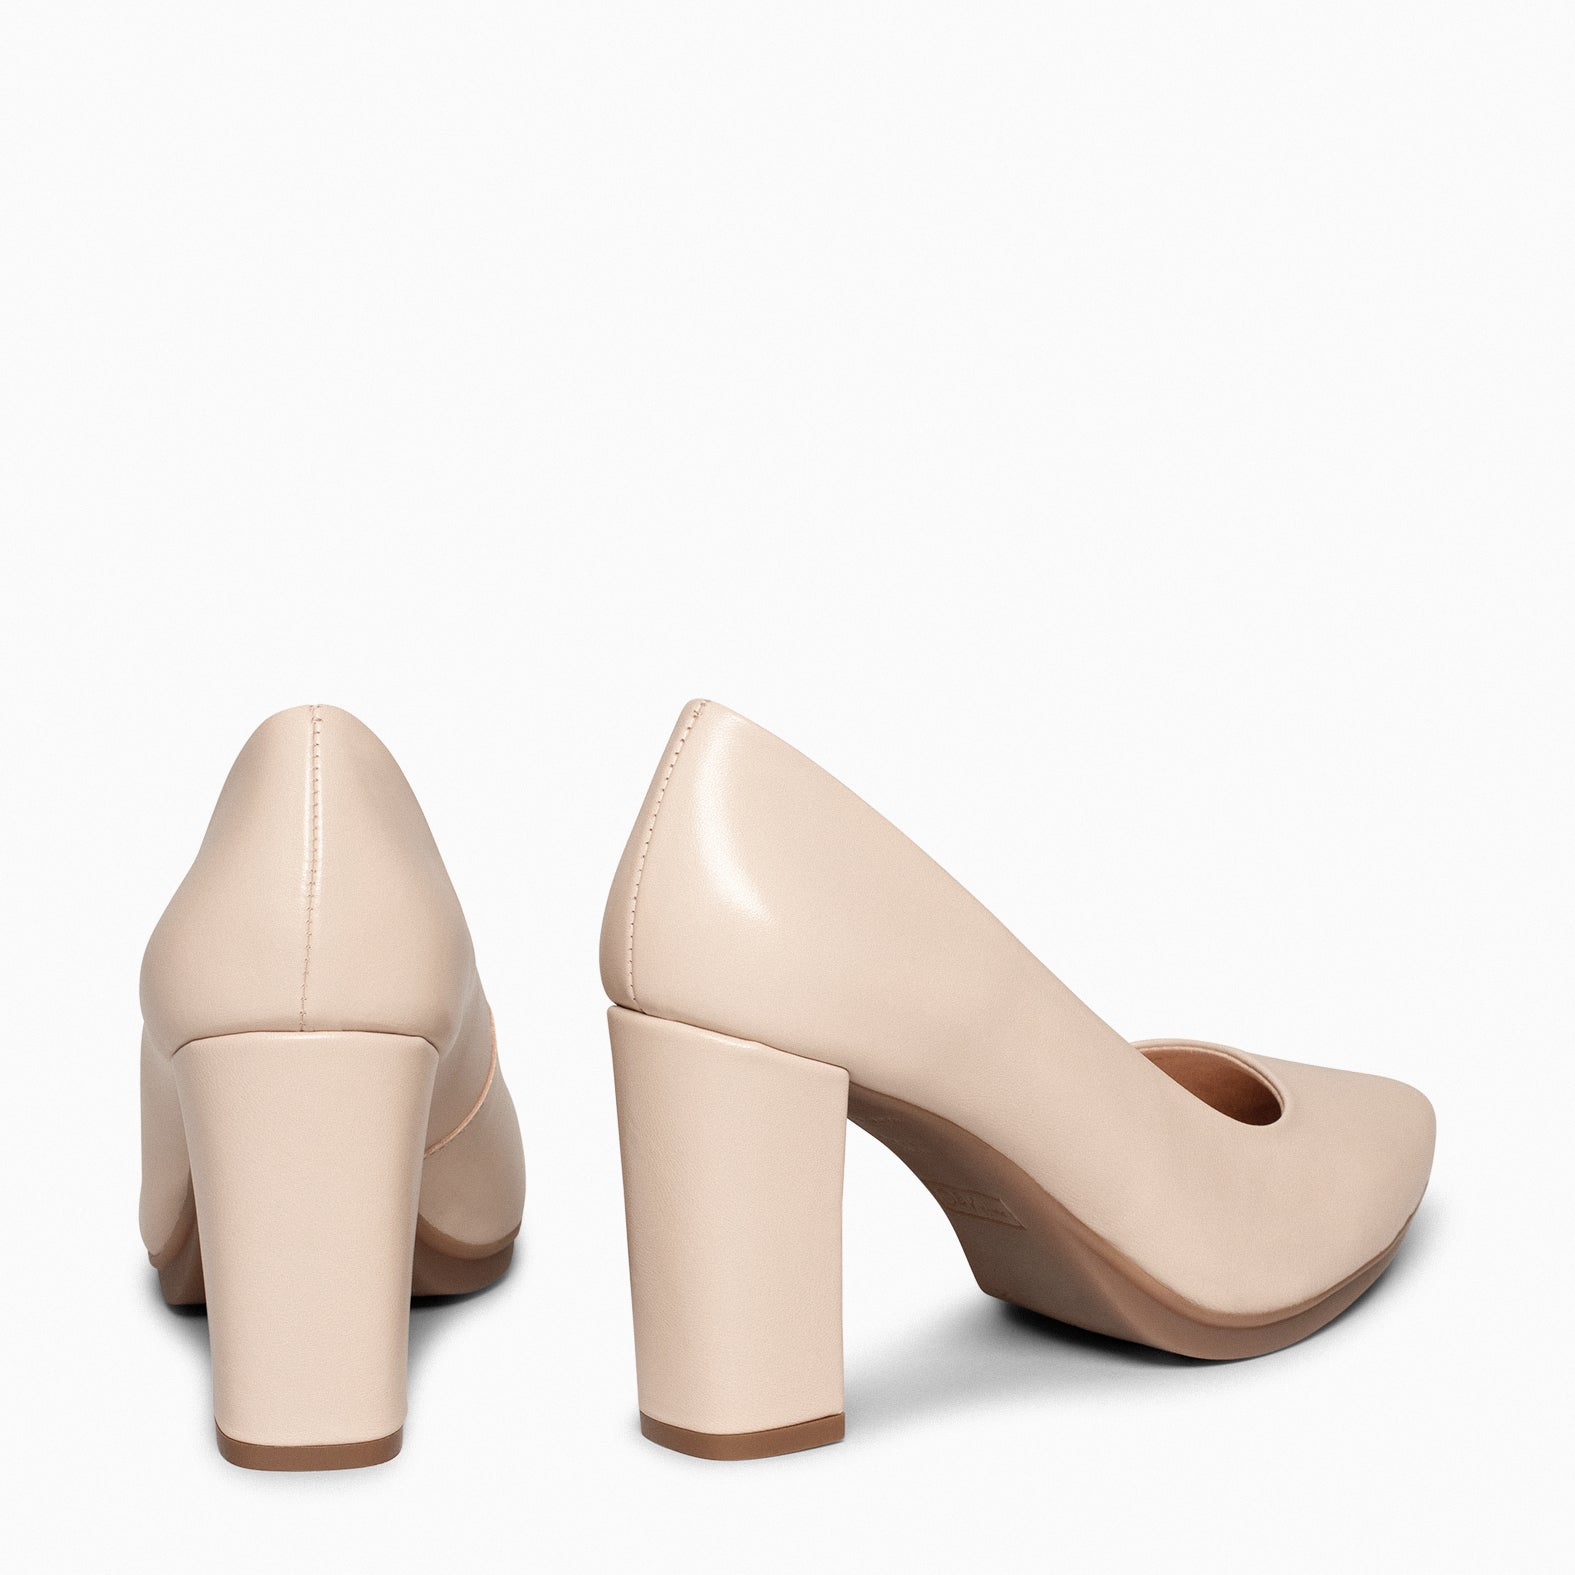 URBAN SALON –  BEIGE nappa leather high heel